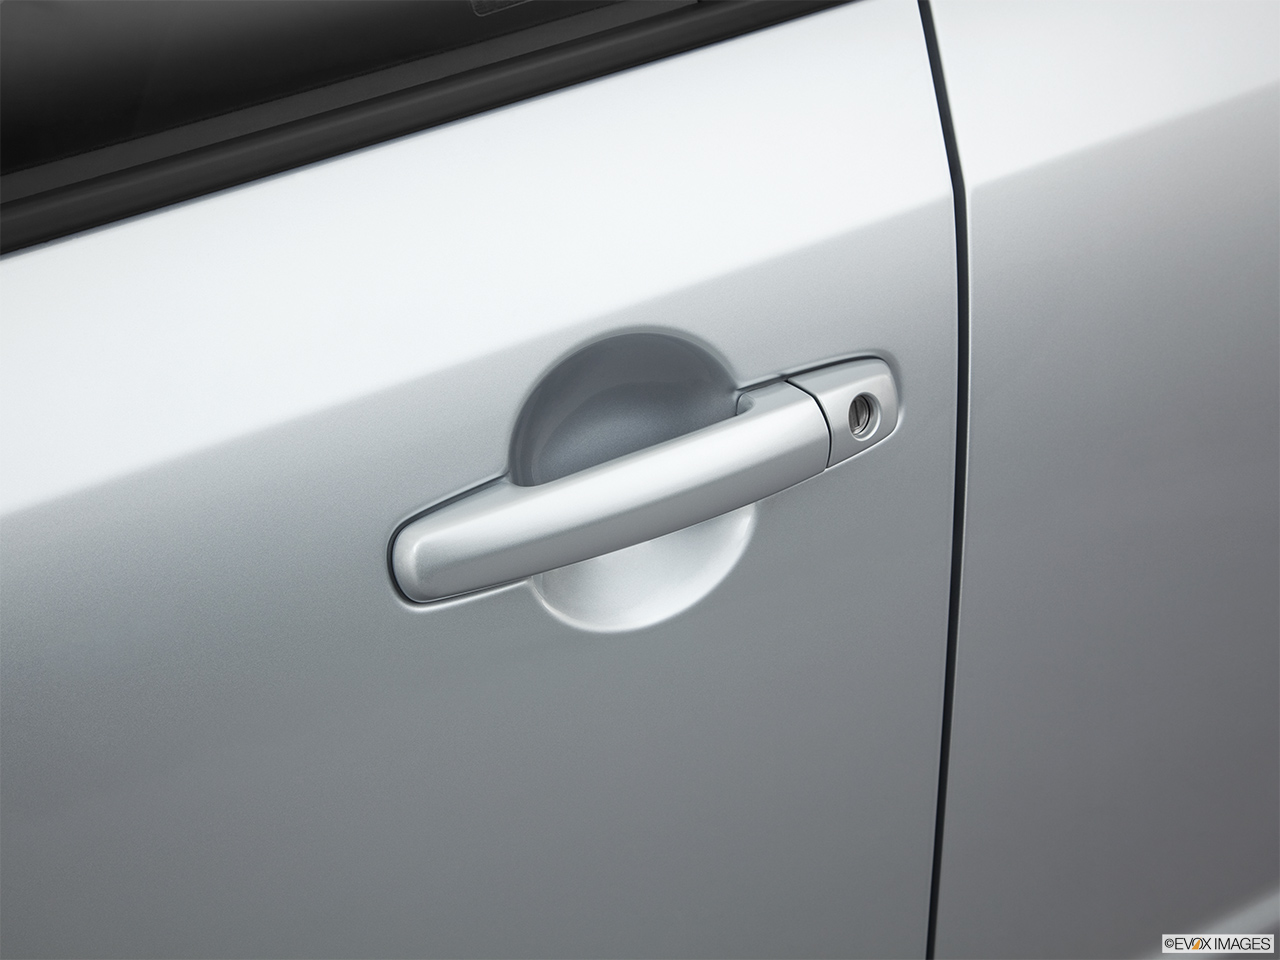 2011 Suzuki SX4 Sportback Technology Drivers Side Door handle. 